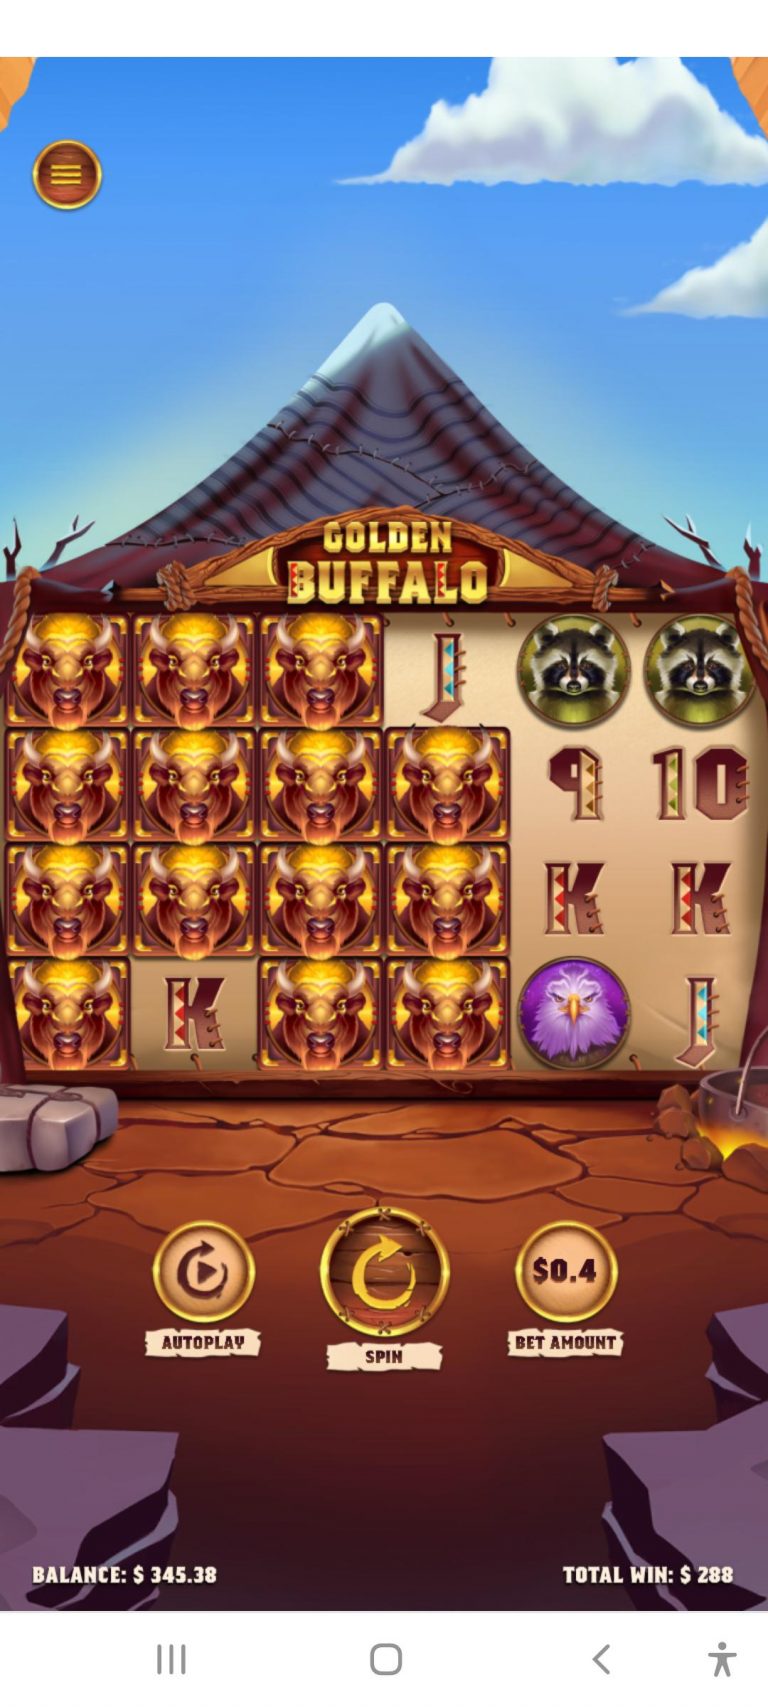 Golden Buffalo Slot Game Winners on 40 Cent Bets